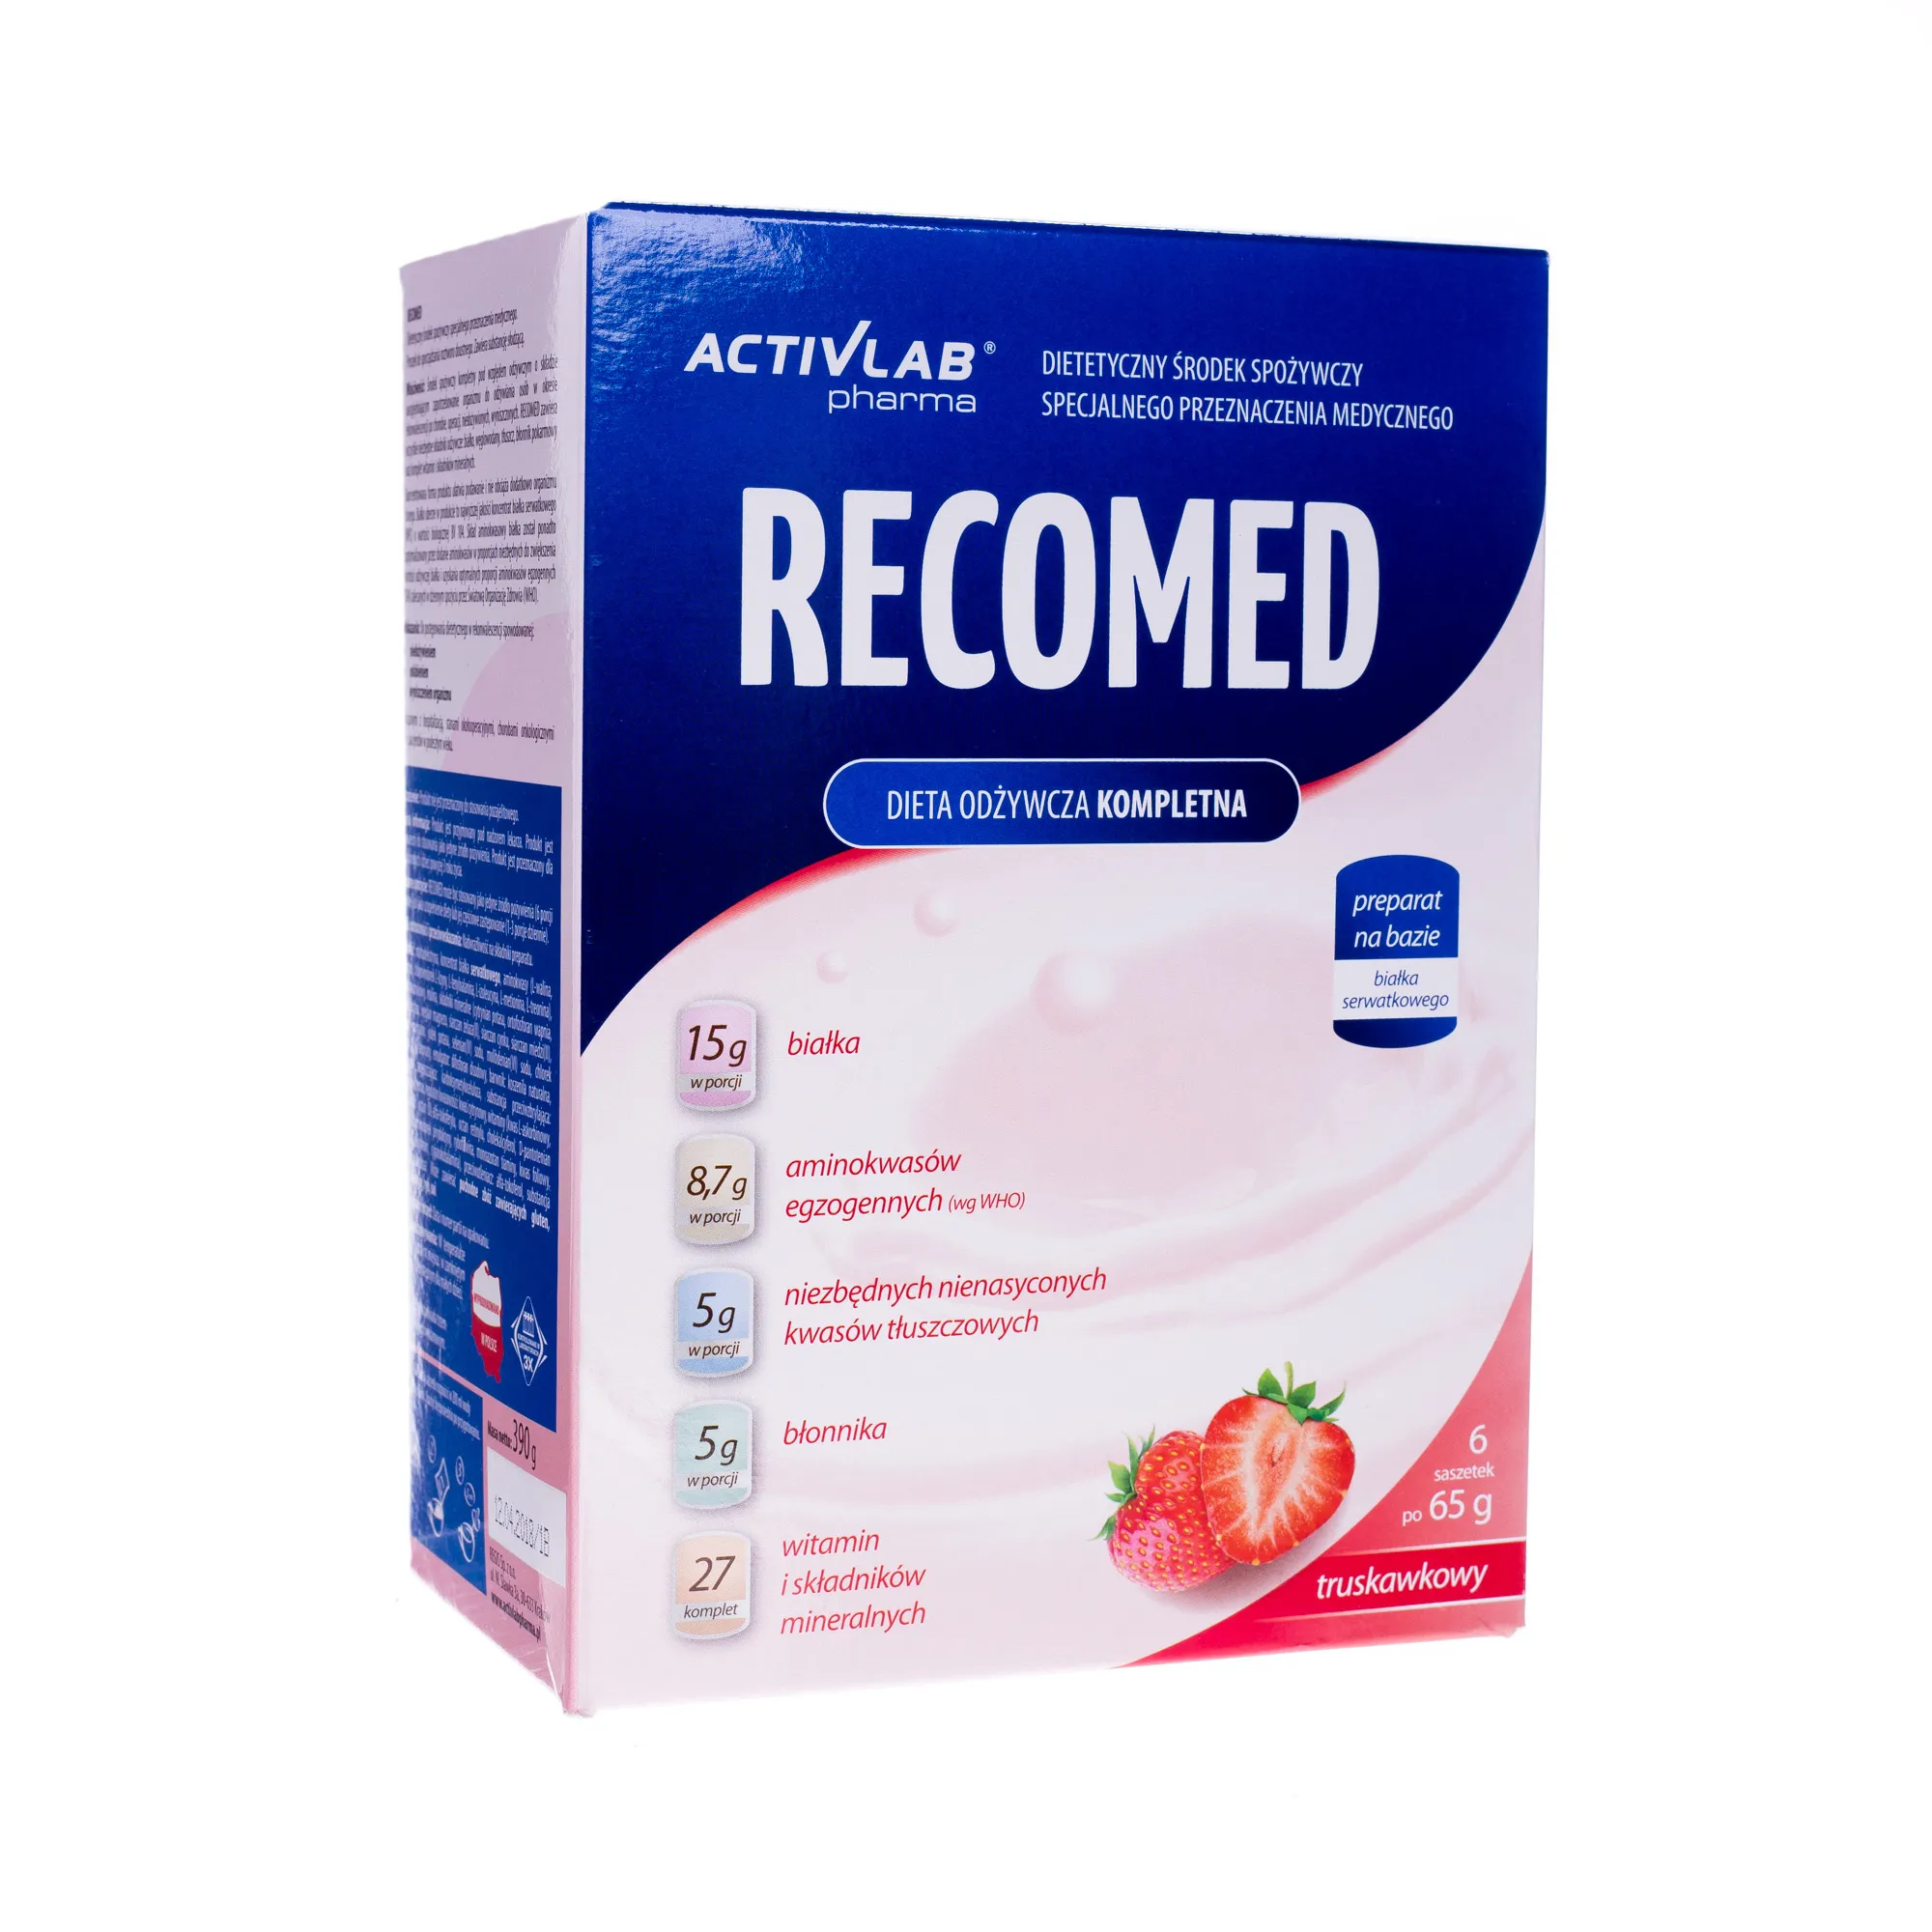 Activlab RecoMed, dieta odżywcza kompletna, smak truskawkowy,  6 saszetek